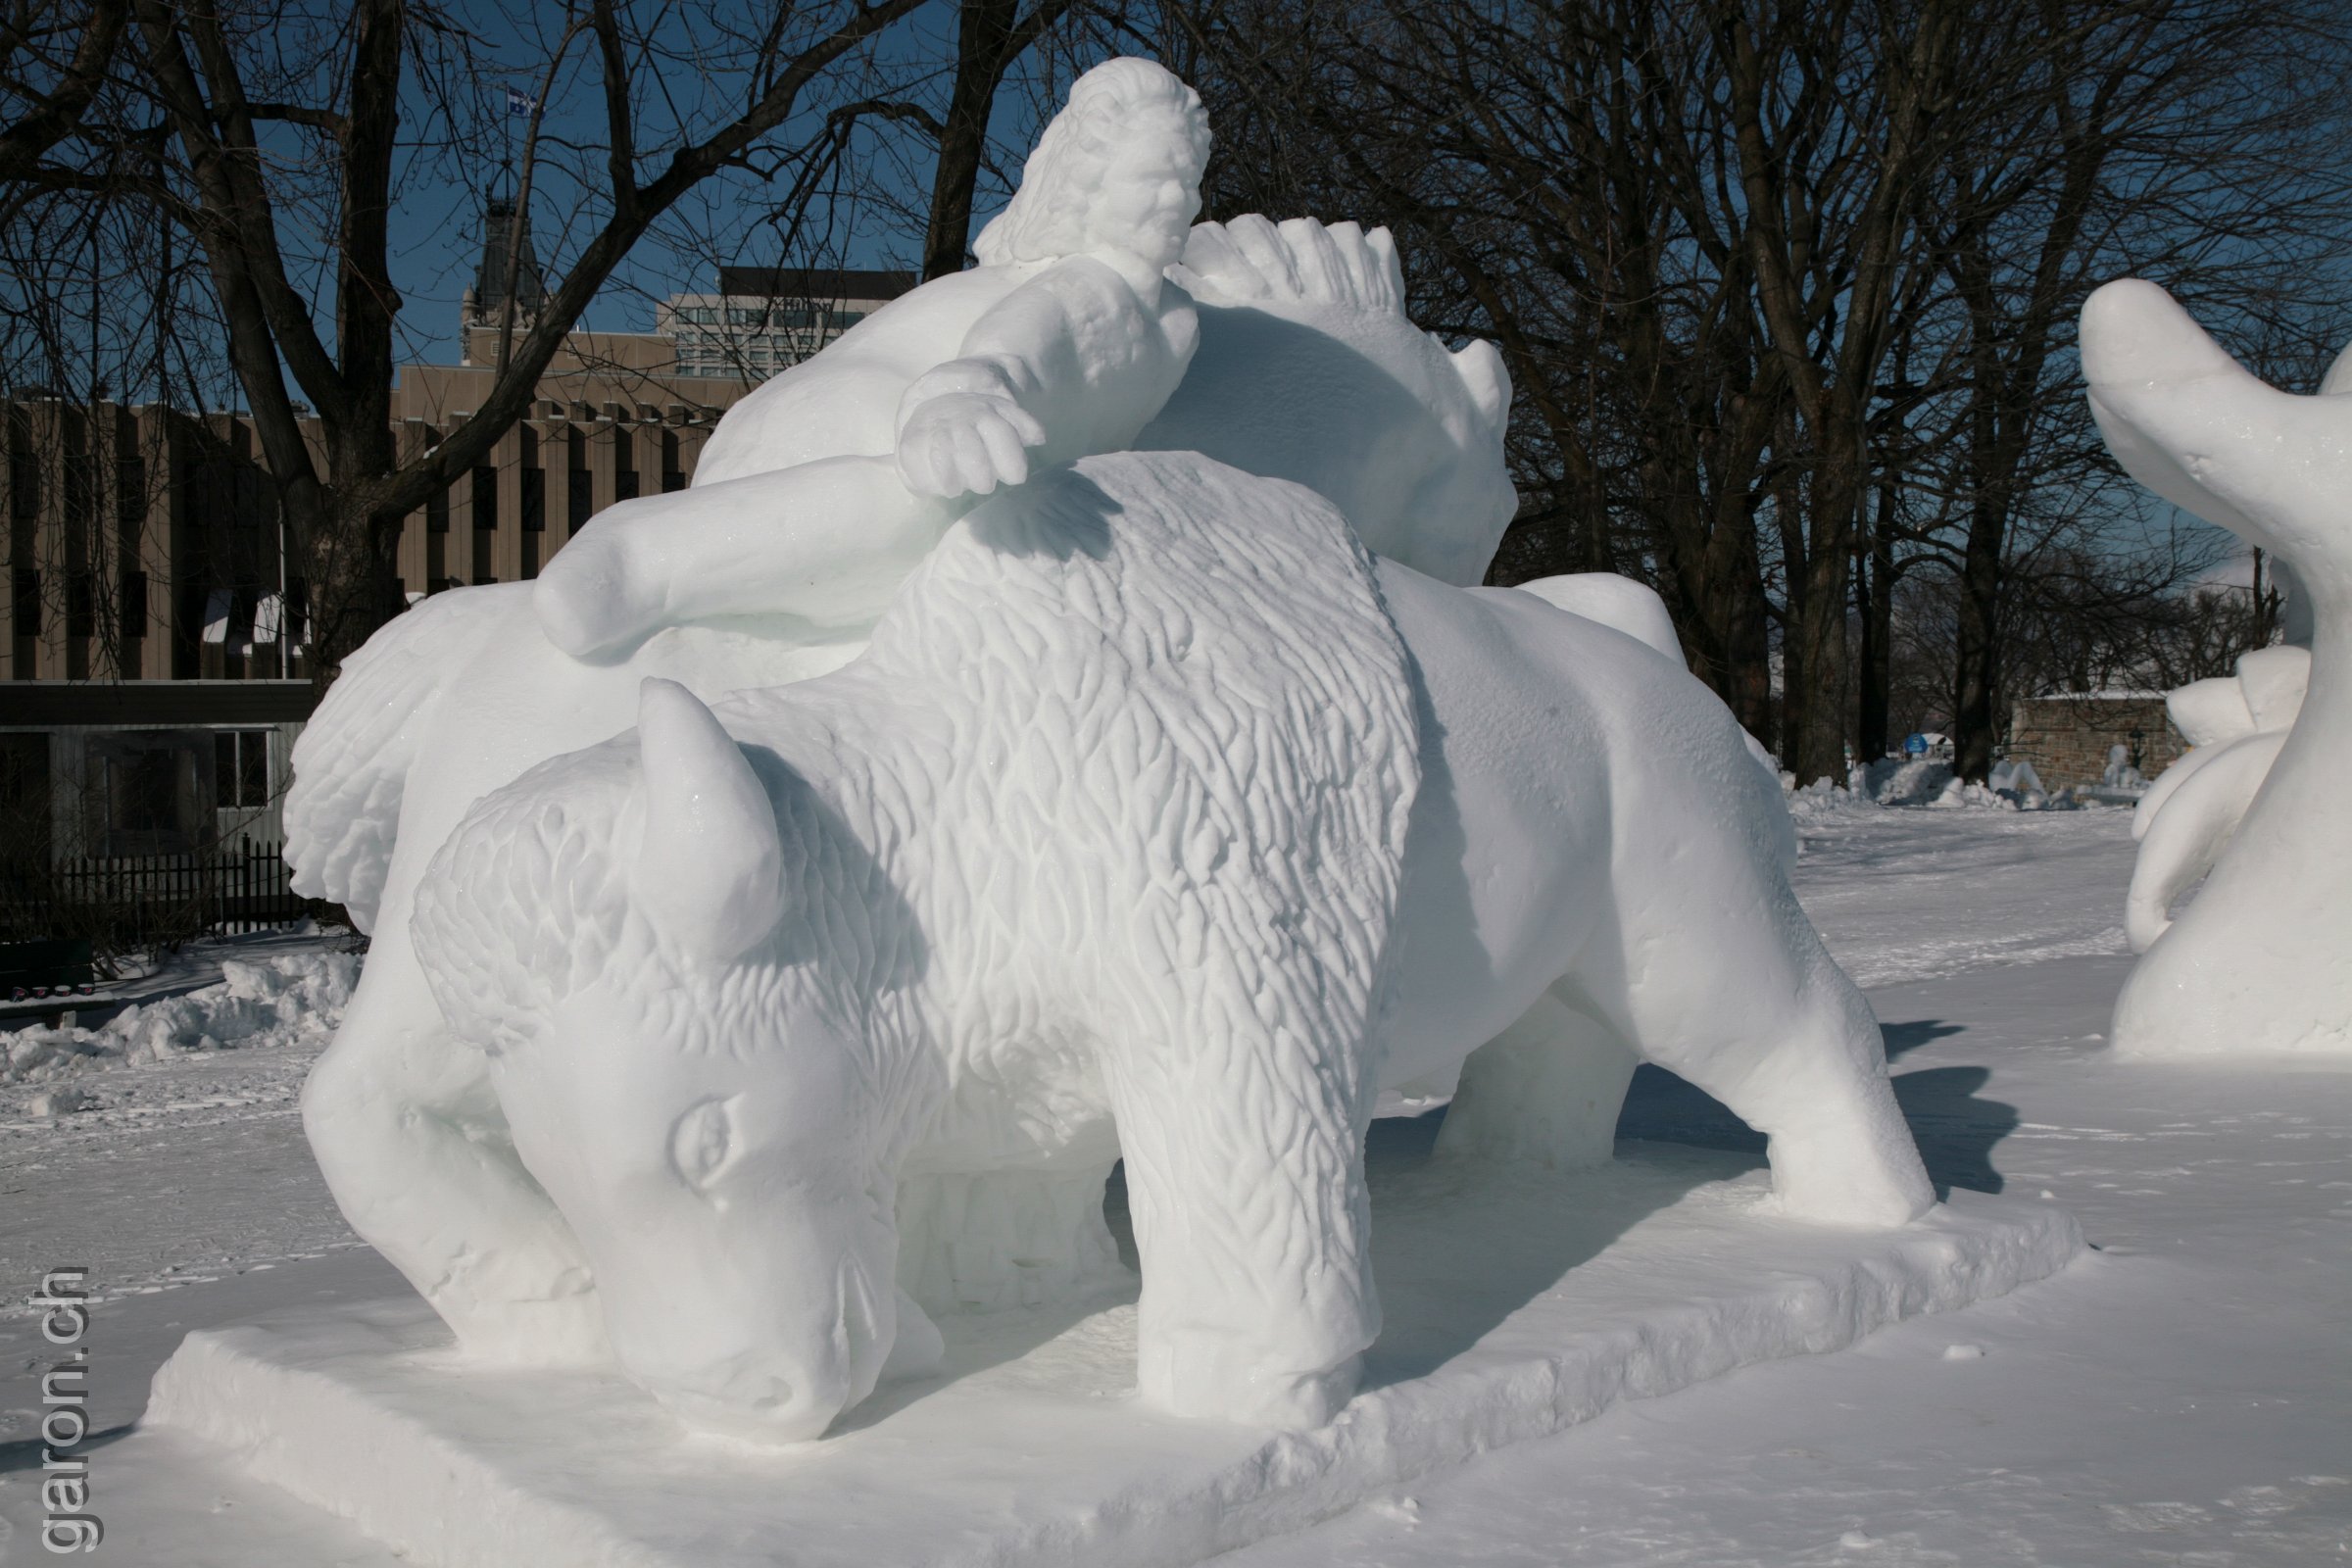 Québec, Carnaval Ice and snow sculptures